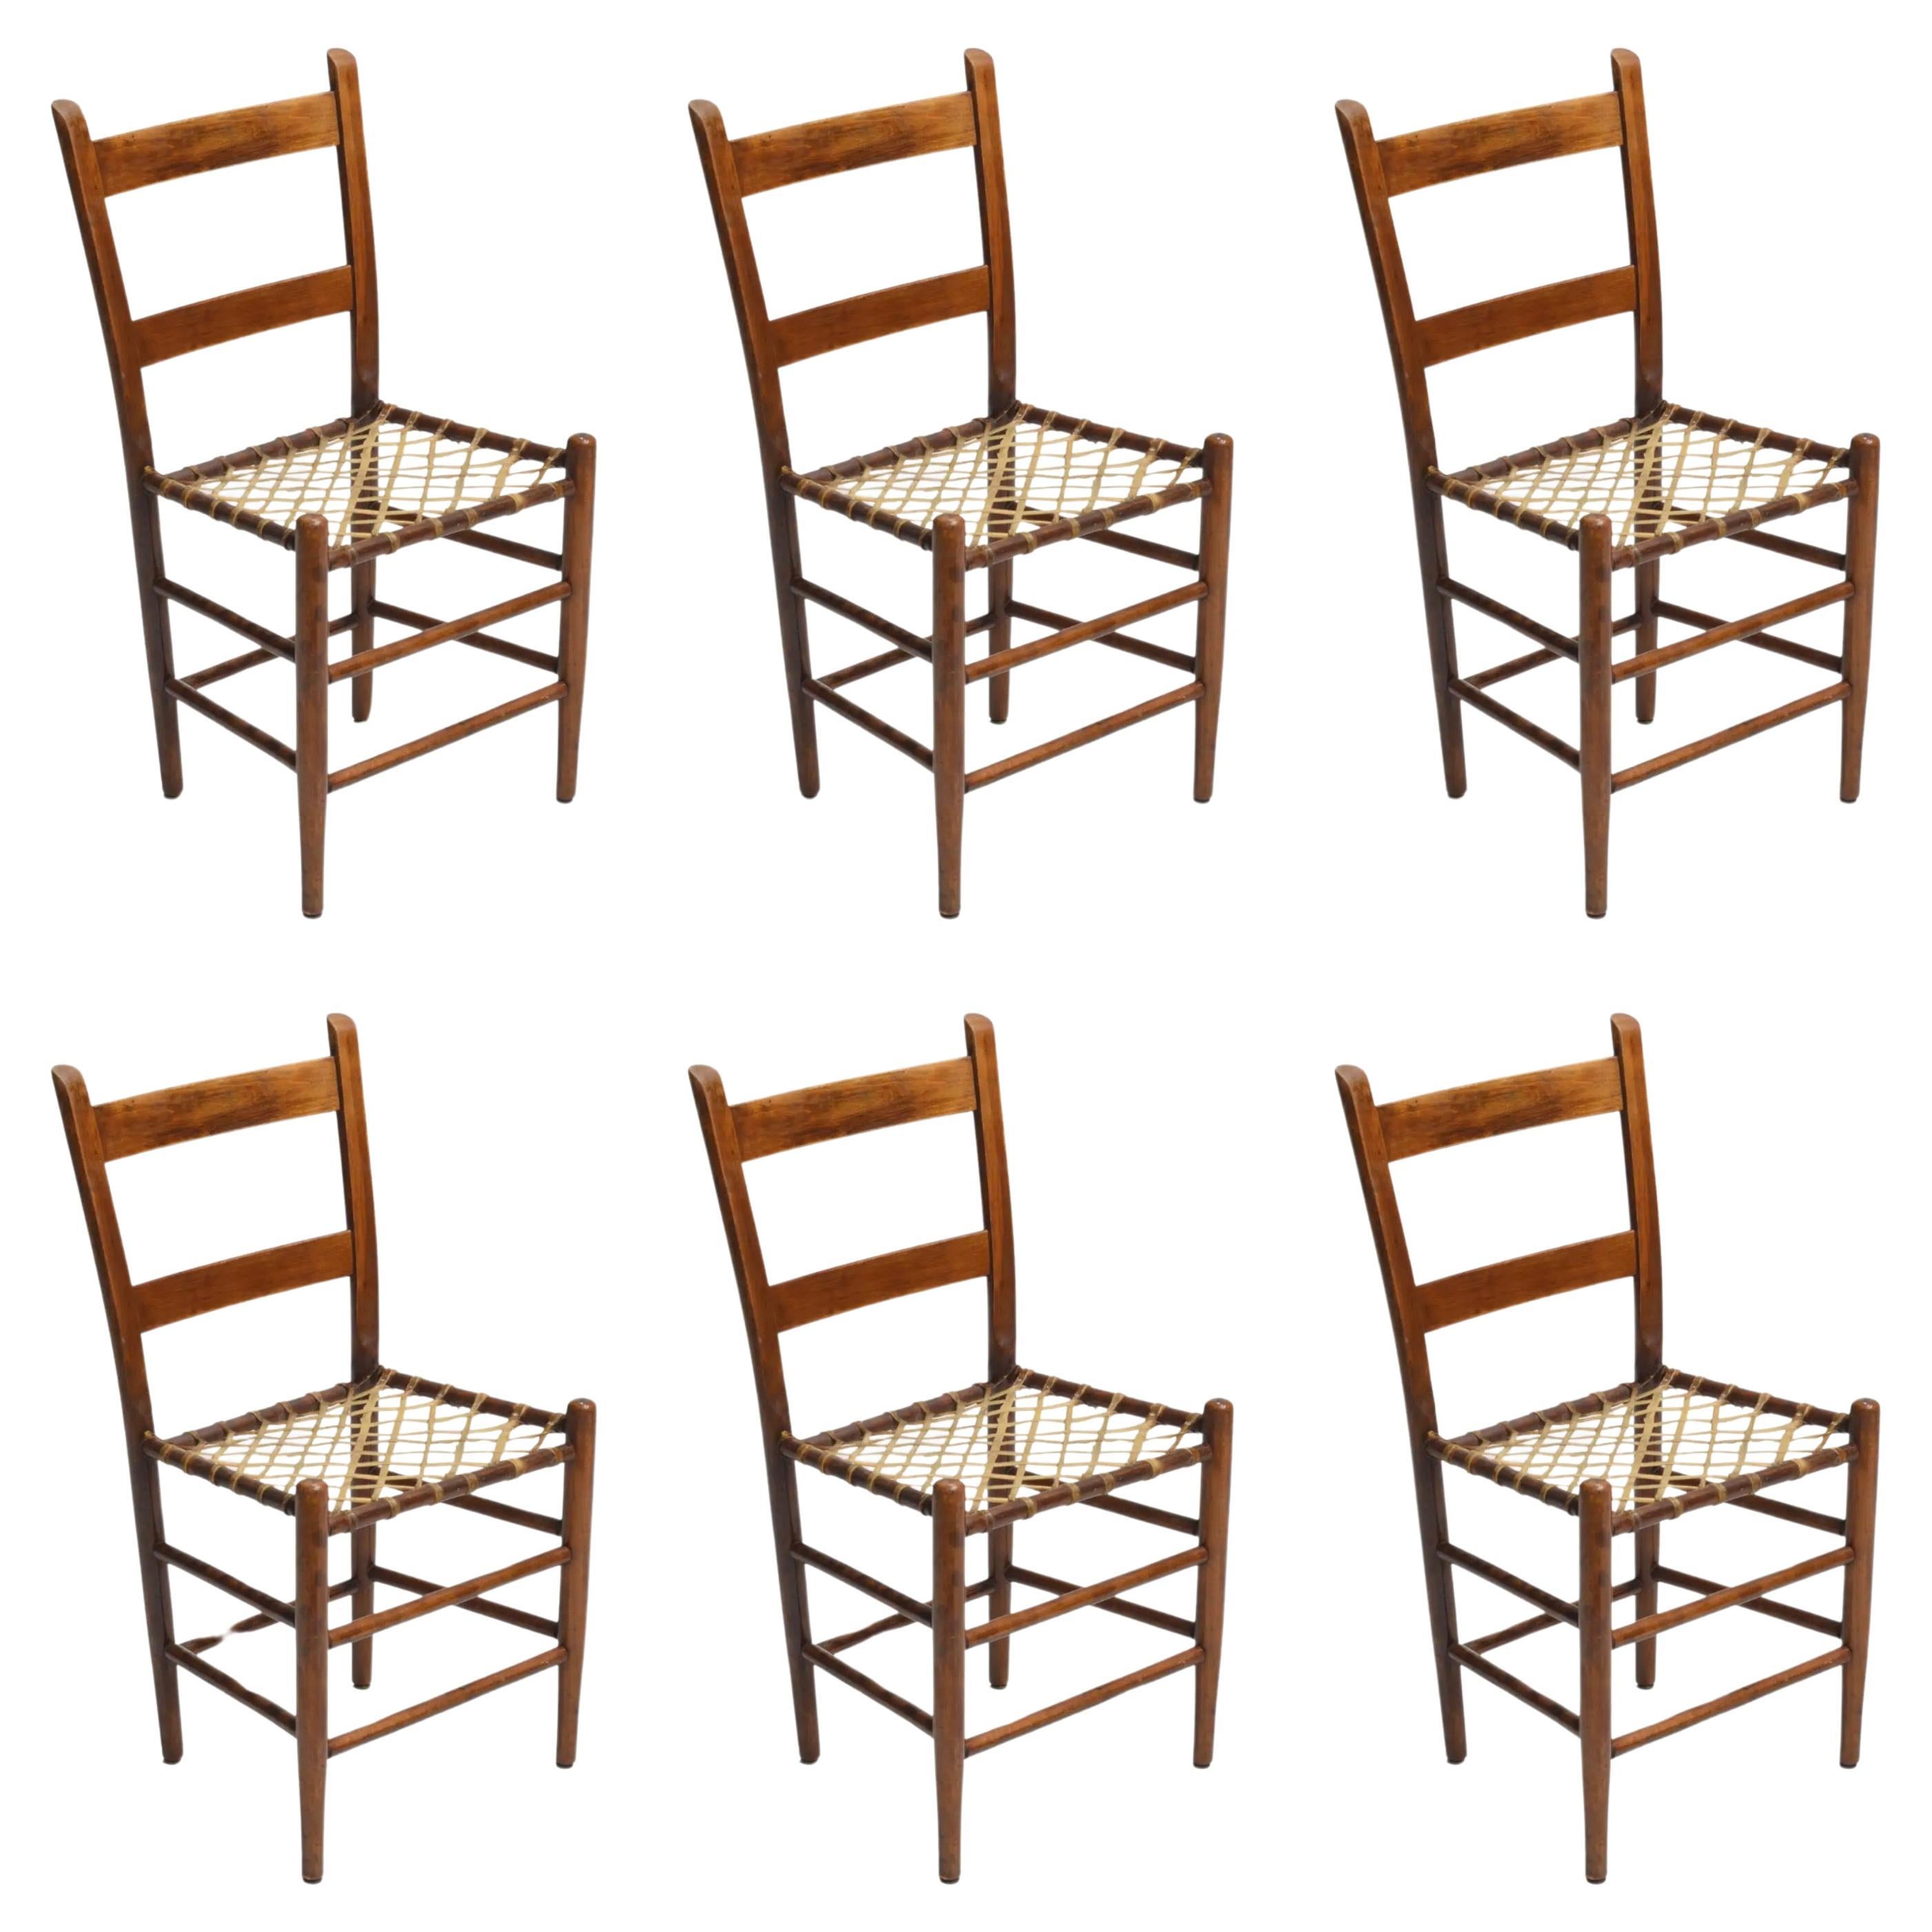 Primitive Stühle aus Rohleder des 19. Jahrhunderts, um 1850 im Angebot